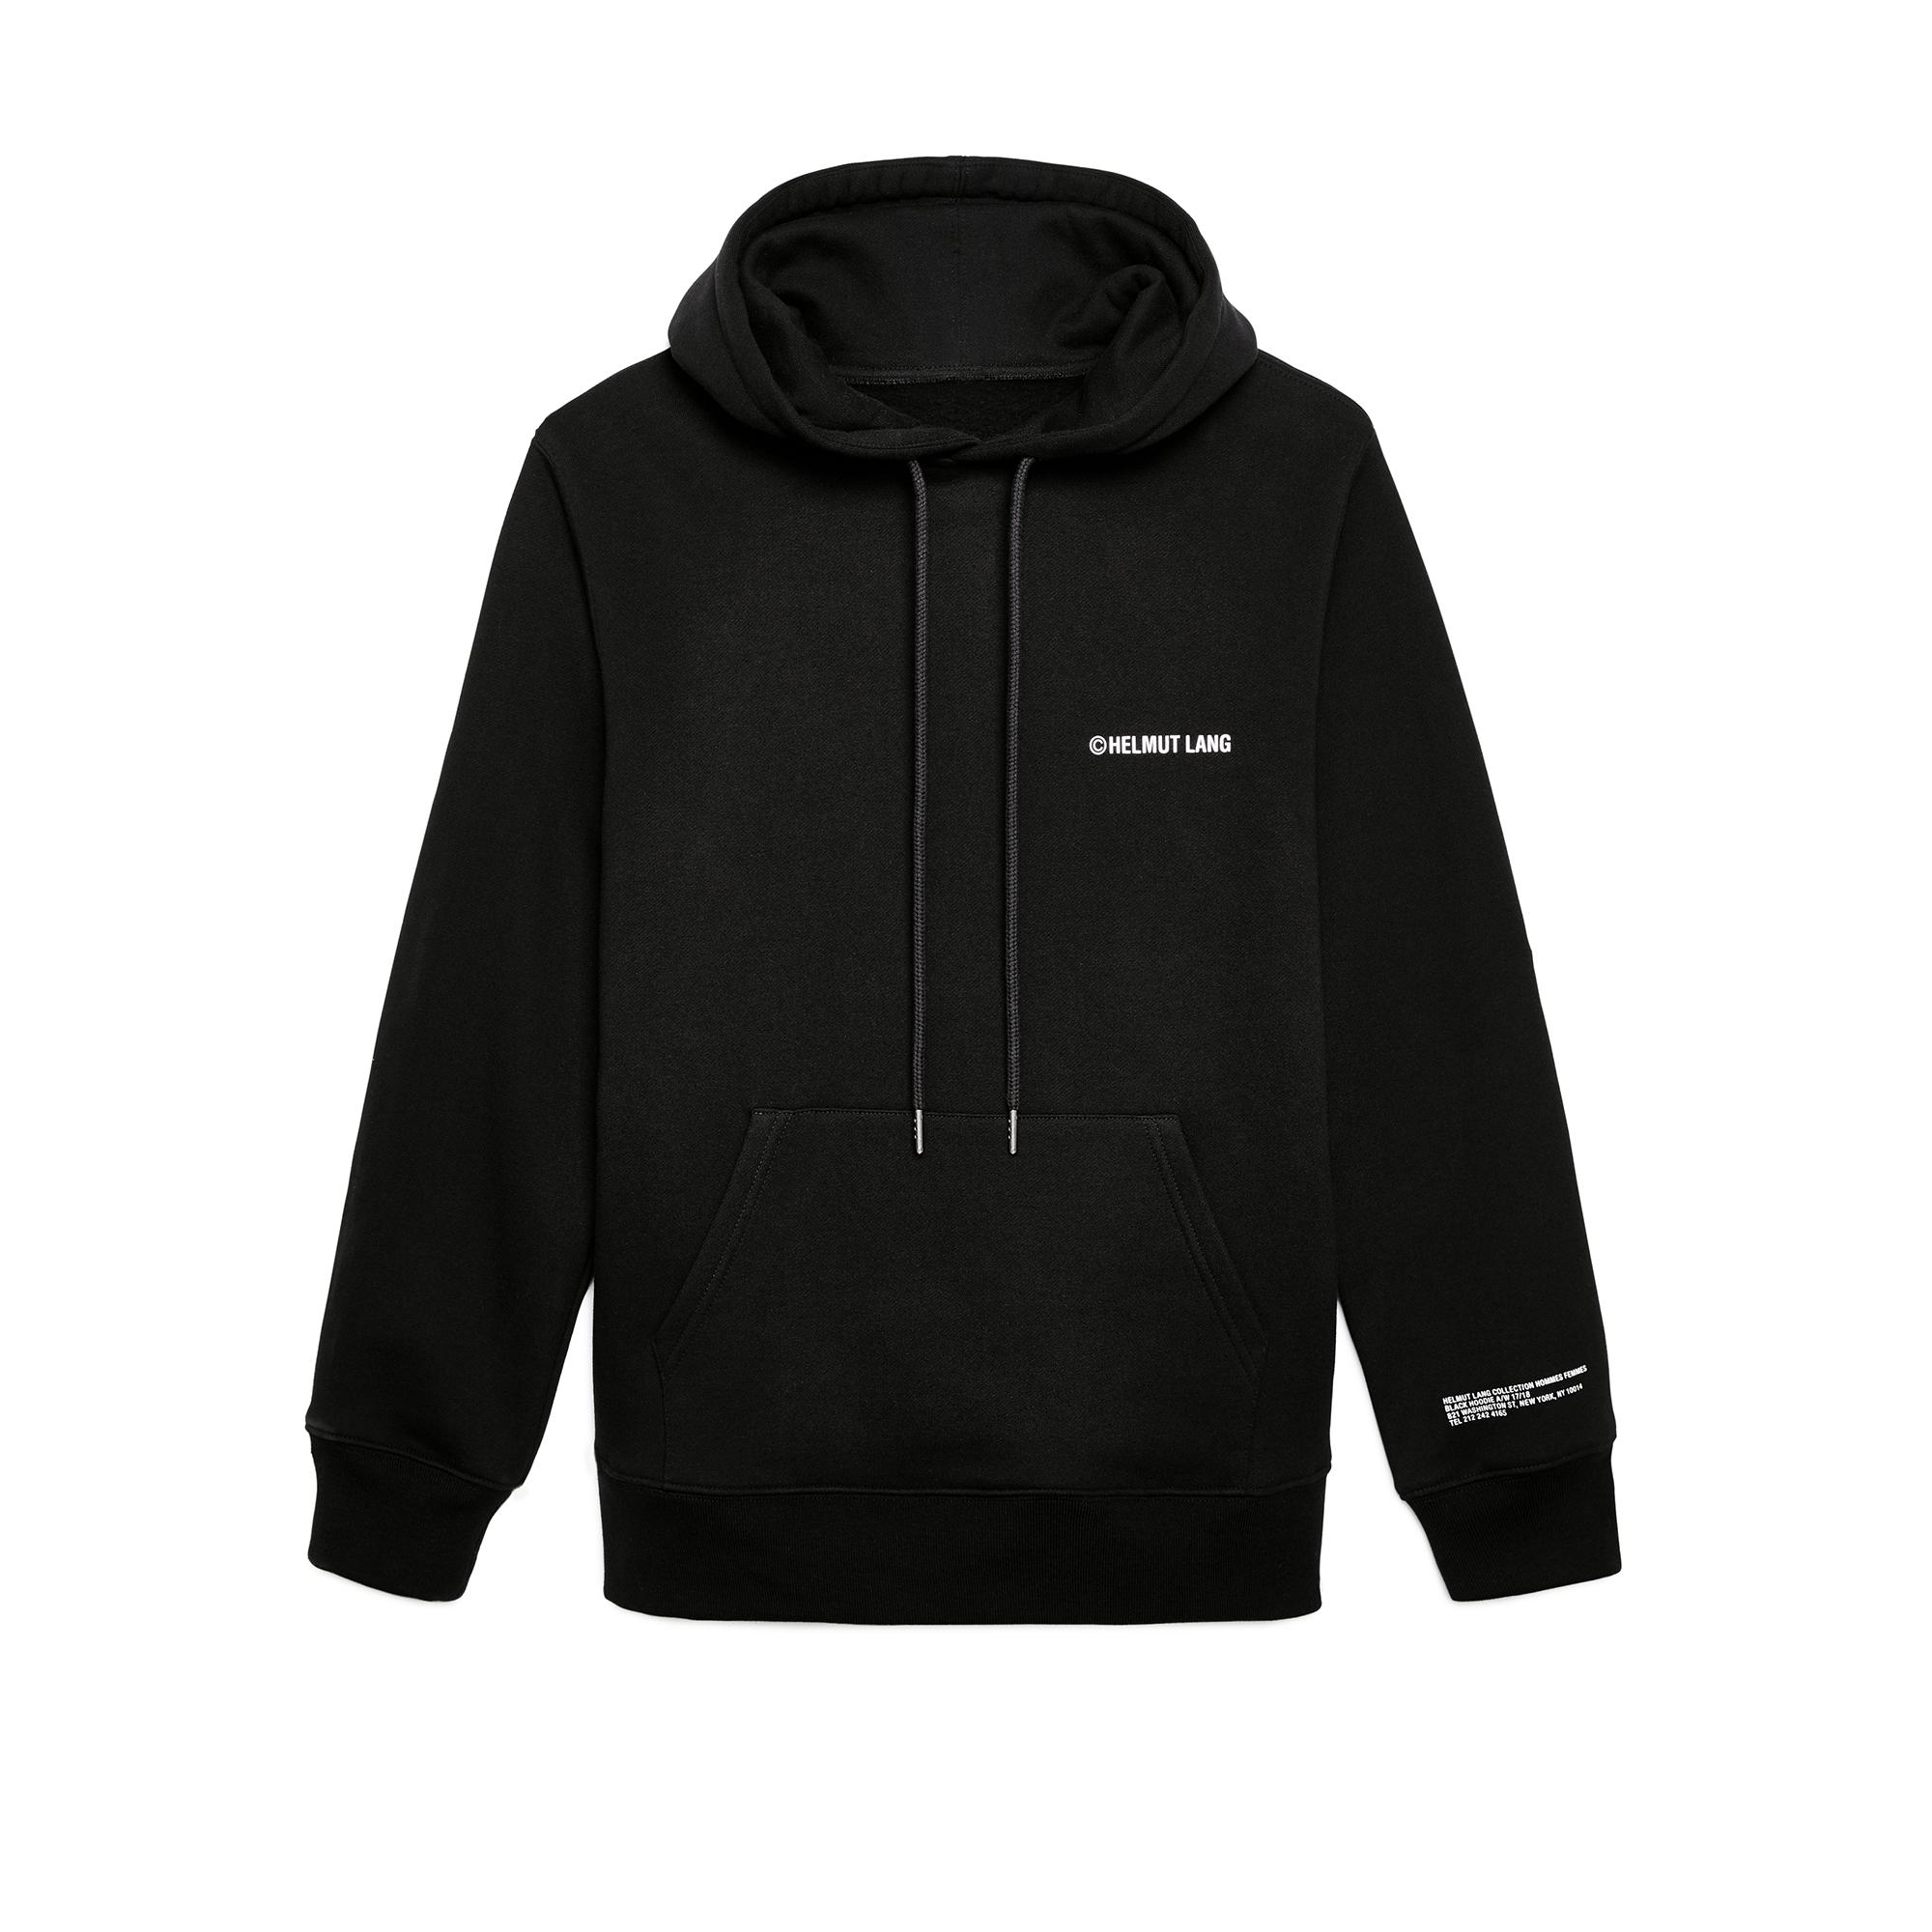 black hoodie with white drawstring